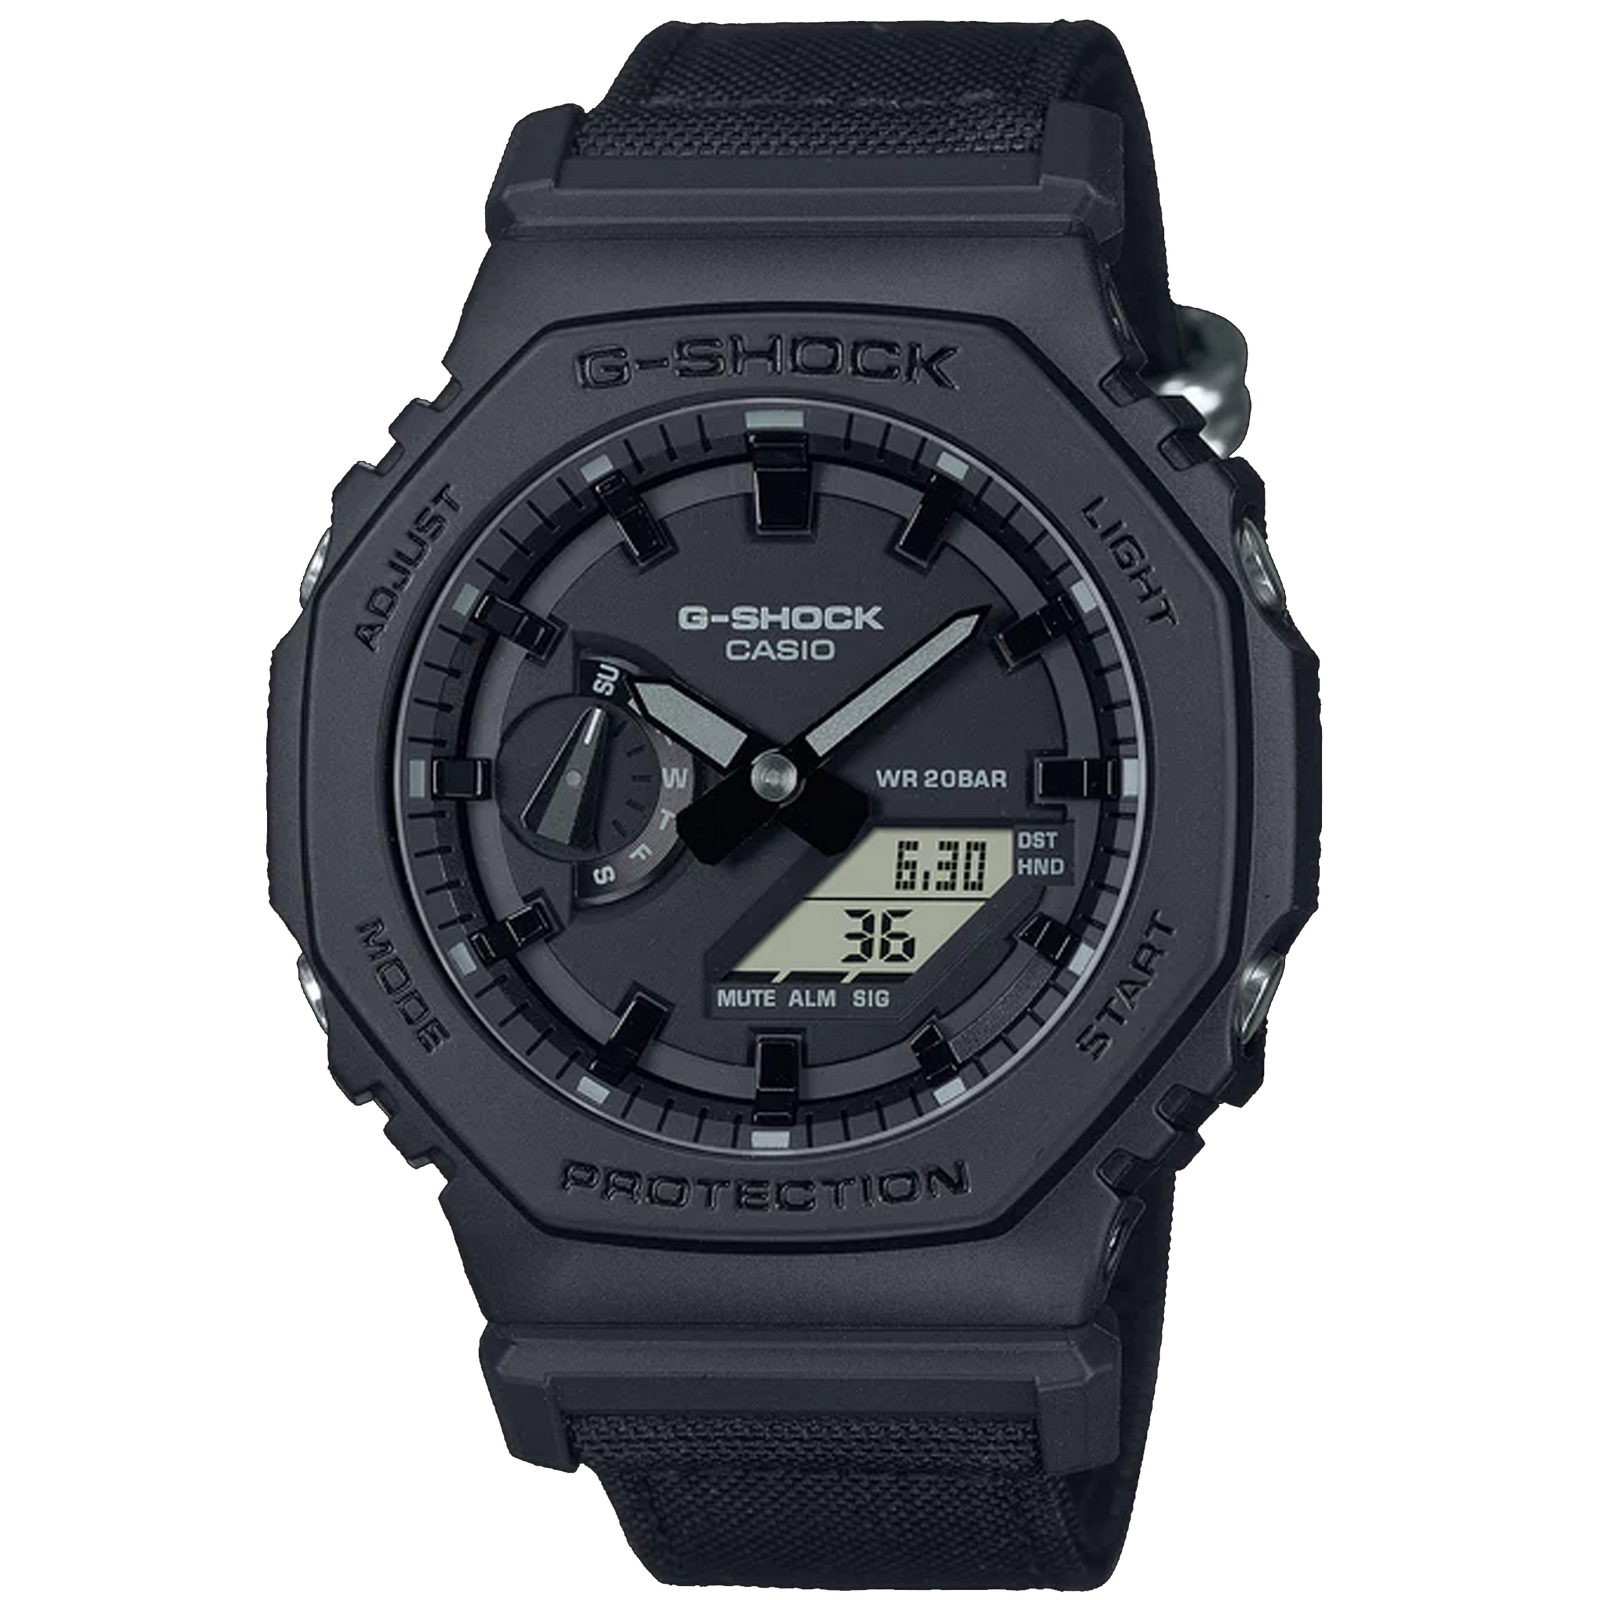 Casio G-Shock - At The Halifax Watch Company - g-shock - g-shock